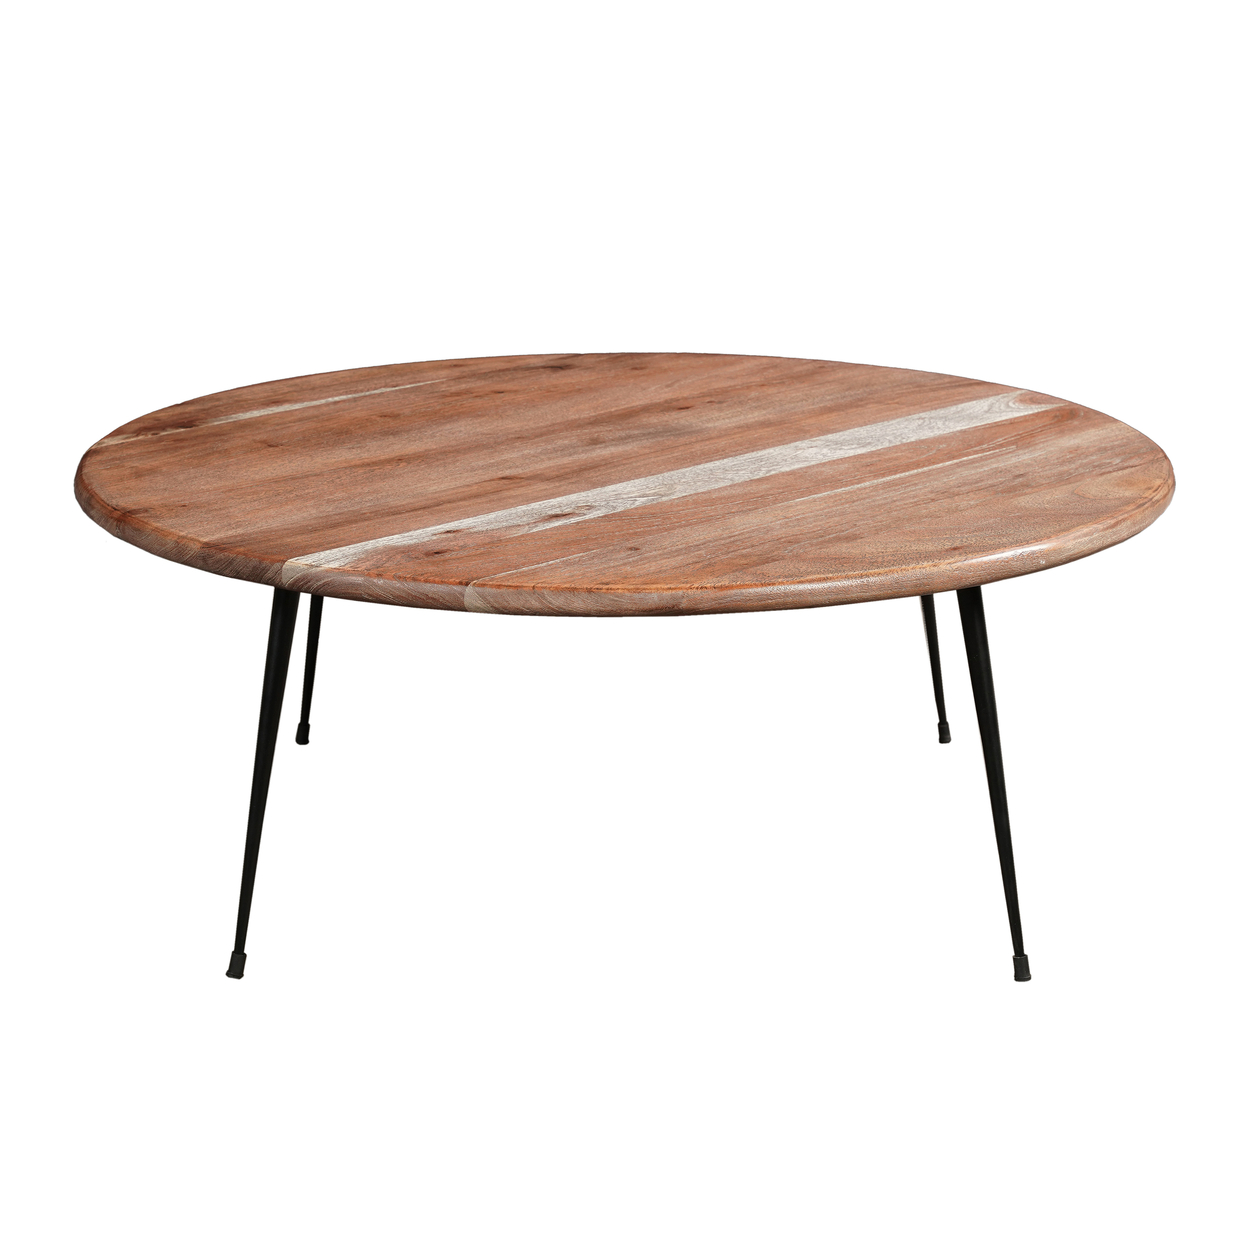 35 Inch Coffee Table, Round Sandblasted Brown Acacia Wood Top, Sleek Iron Legs - Saltoro Sherpi